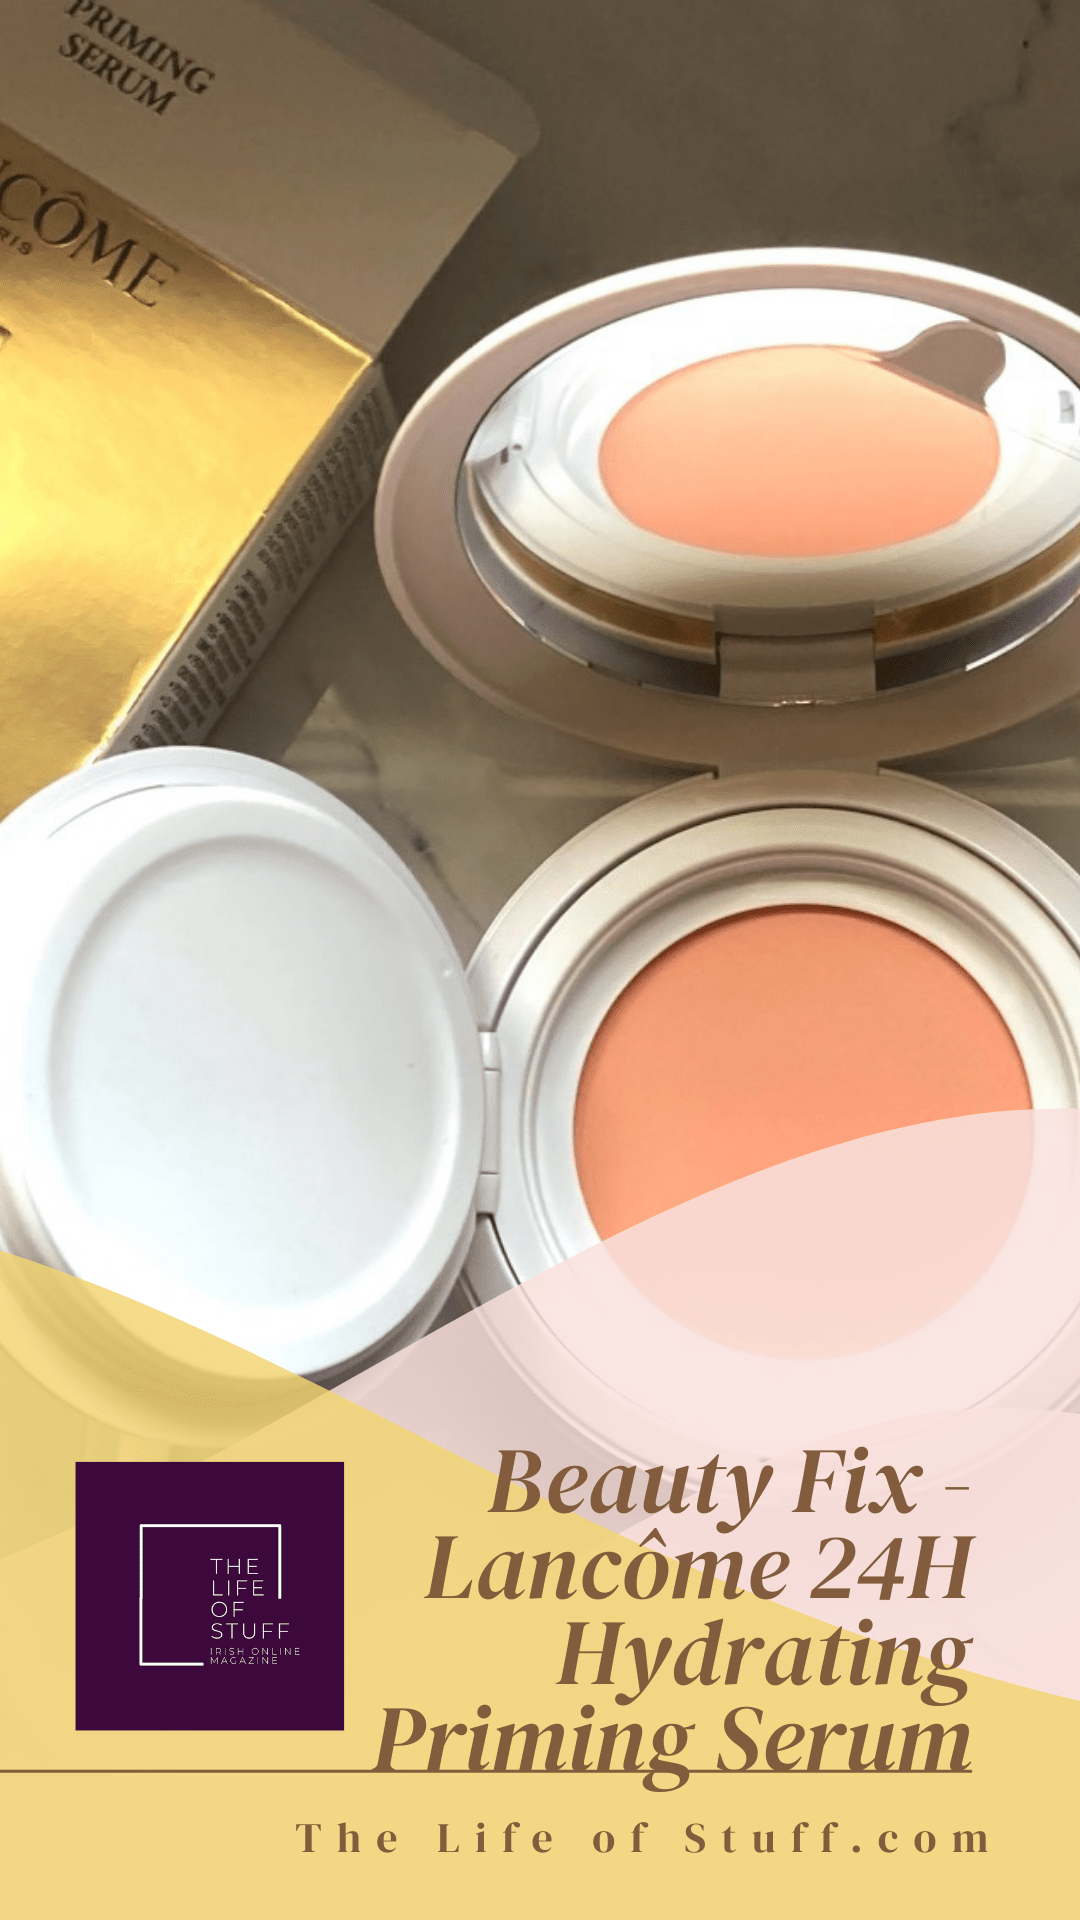 Beauty Fix - Lancôme 24H Hydrating Priming Serum - The Life of Stuff